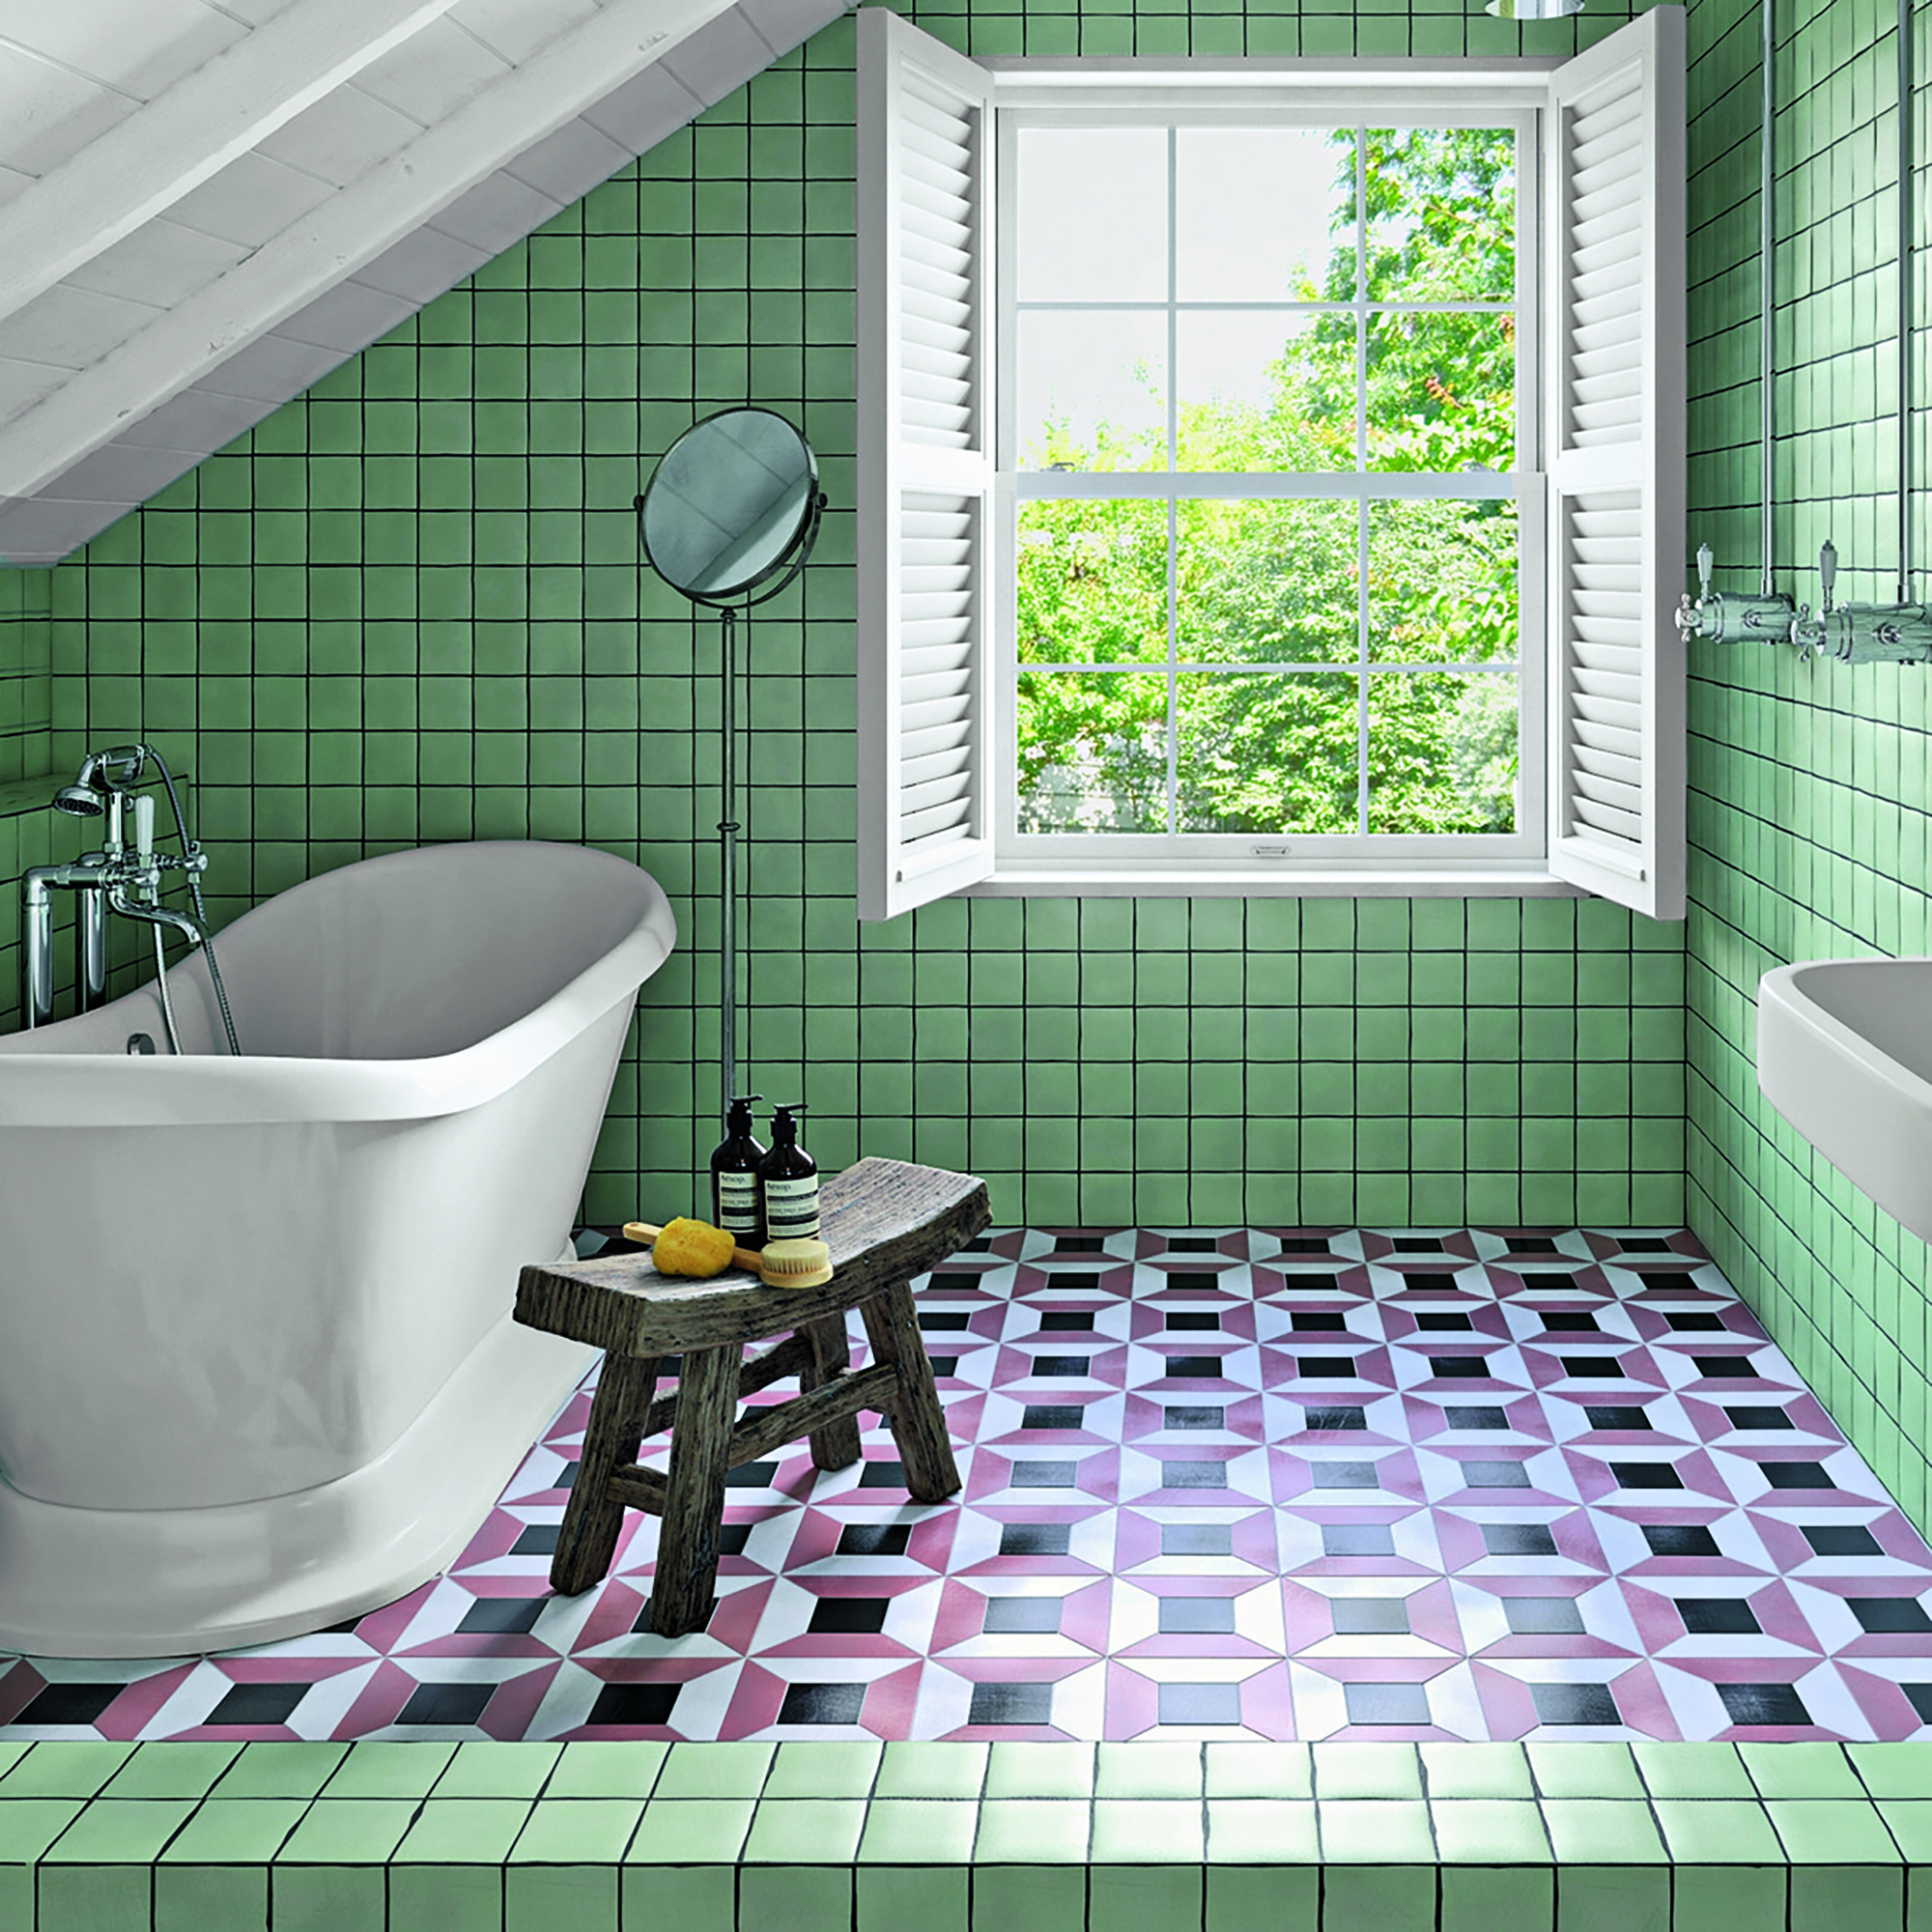 Bathroom with green wall tiles and geometric floor tiles